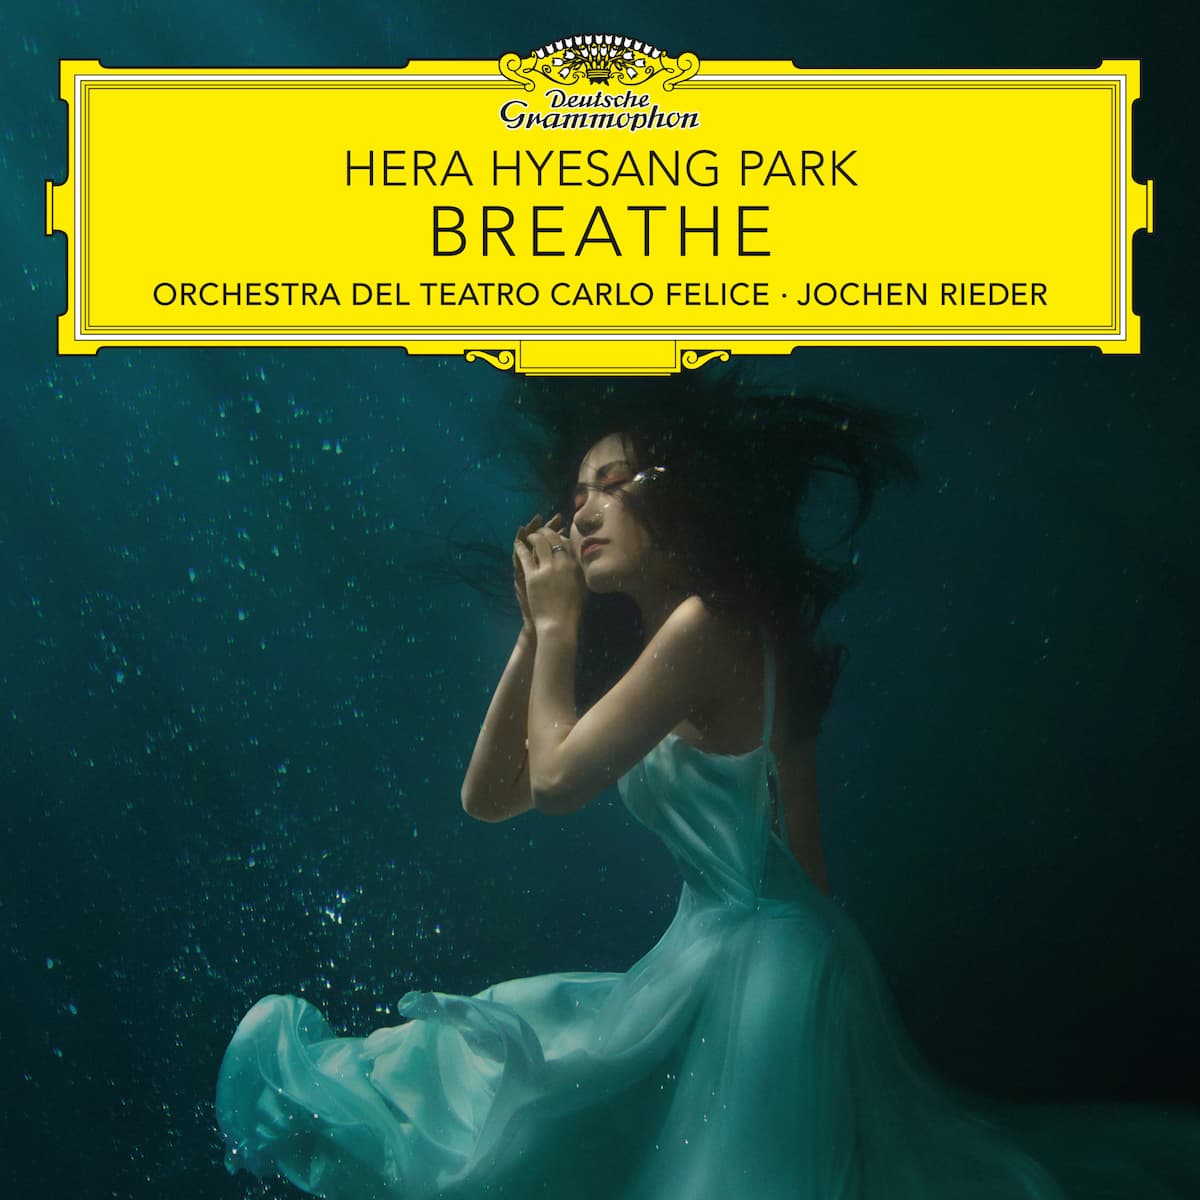 BREATHE Hera Hyesang Park album cover